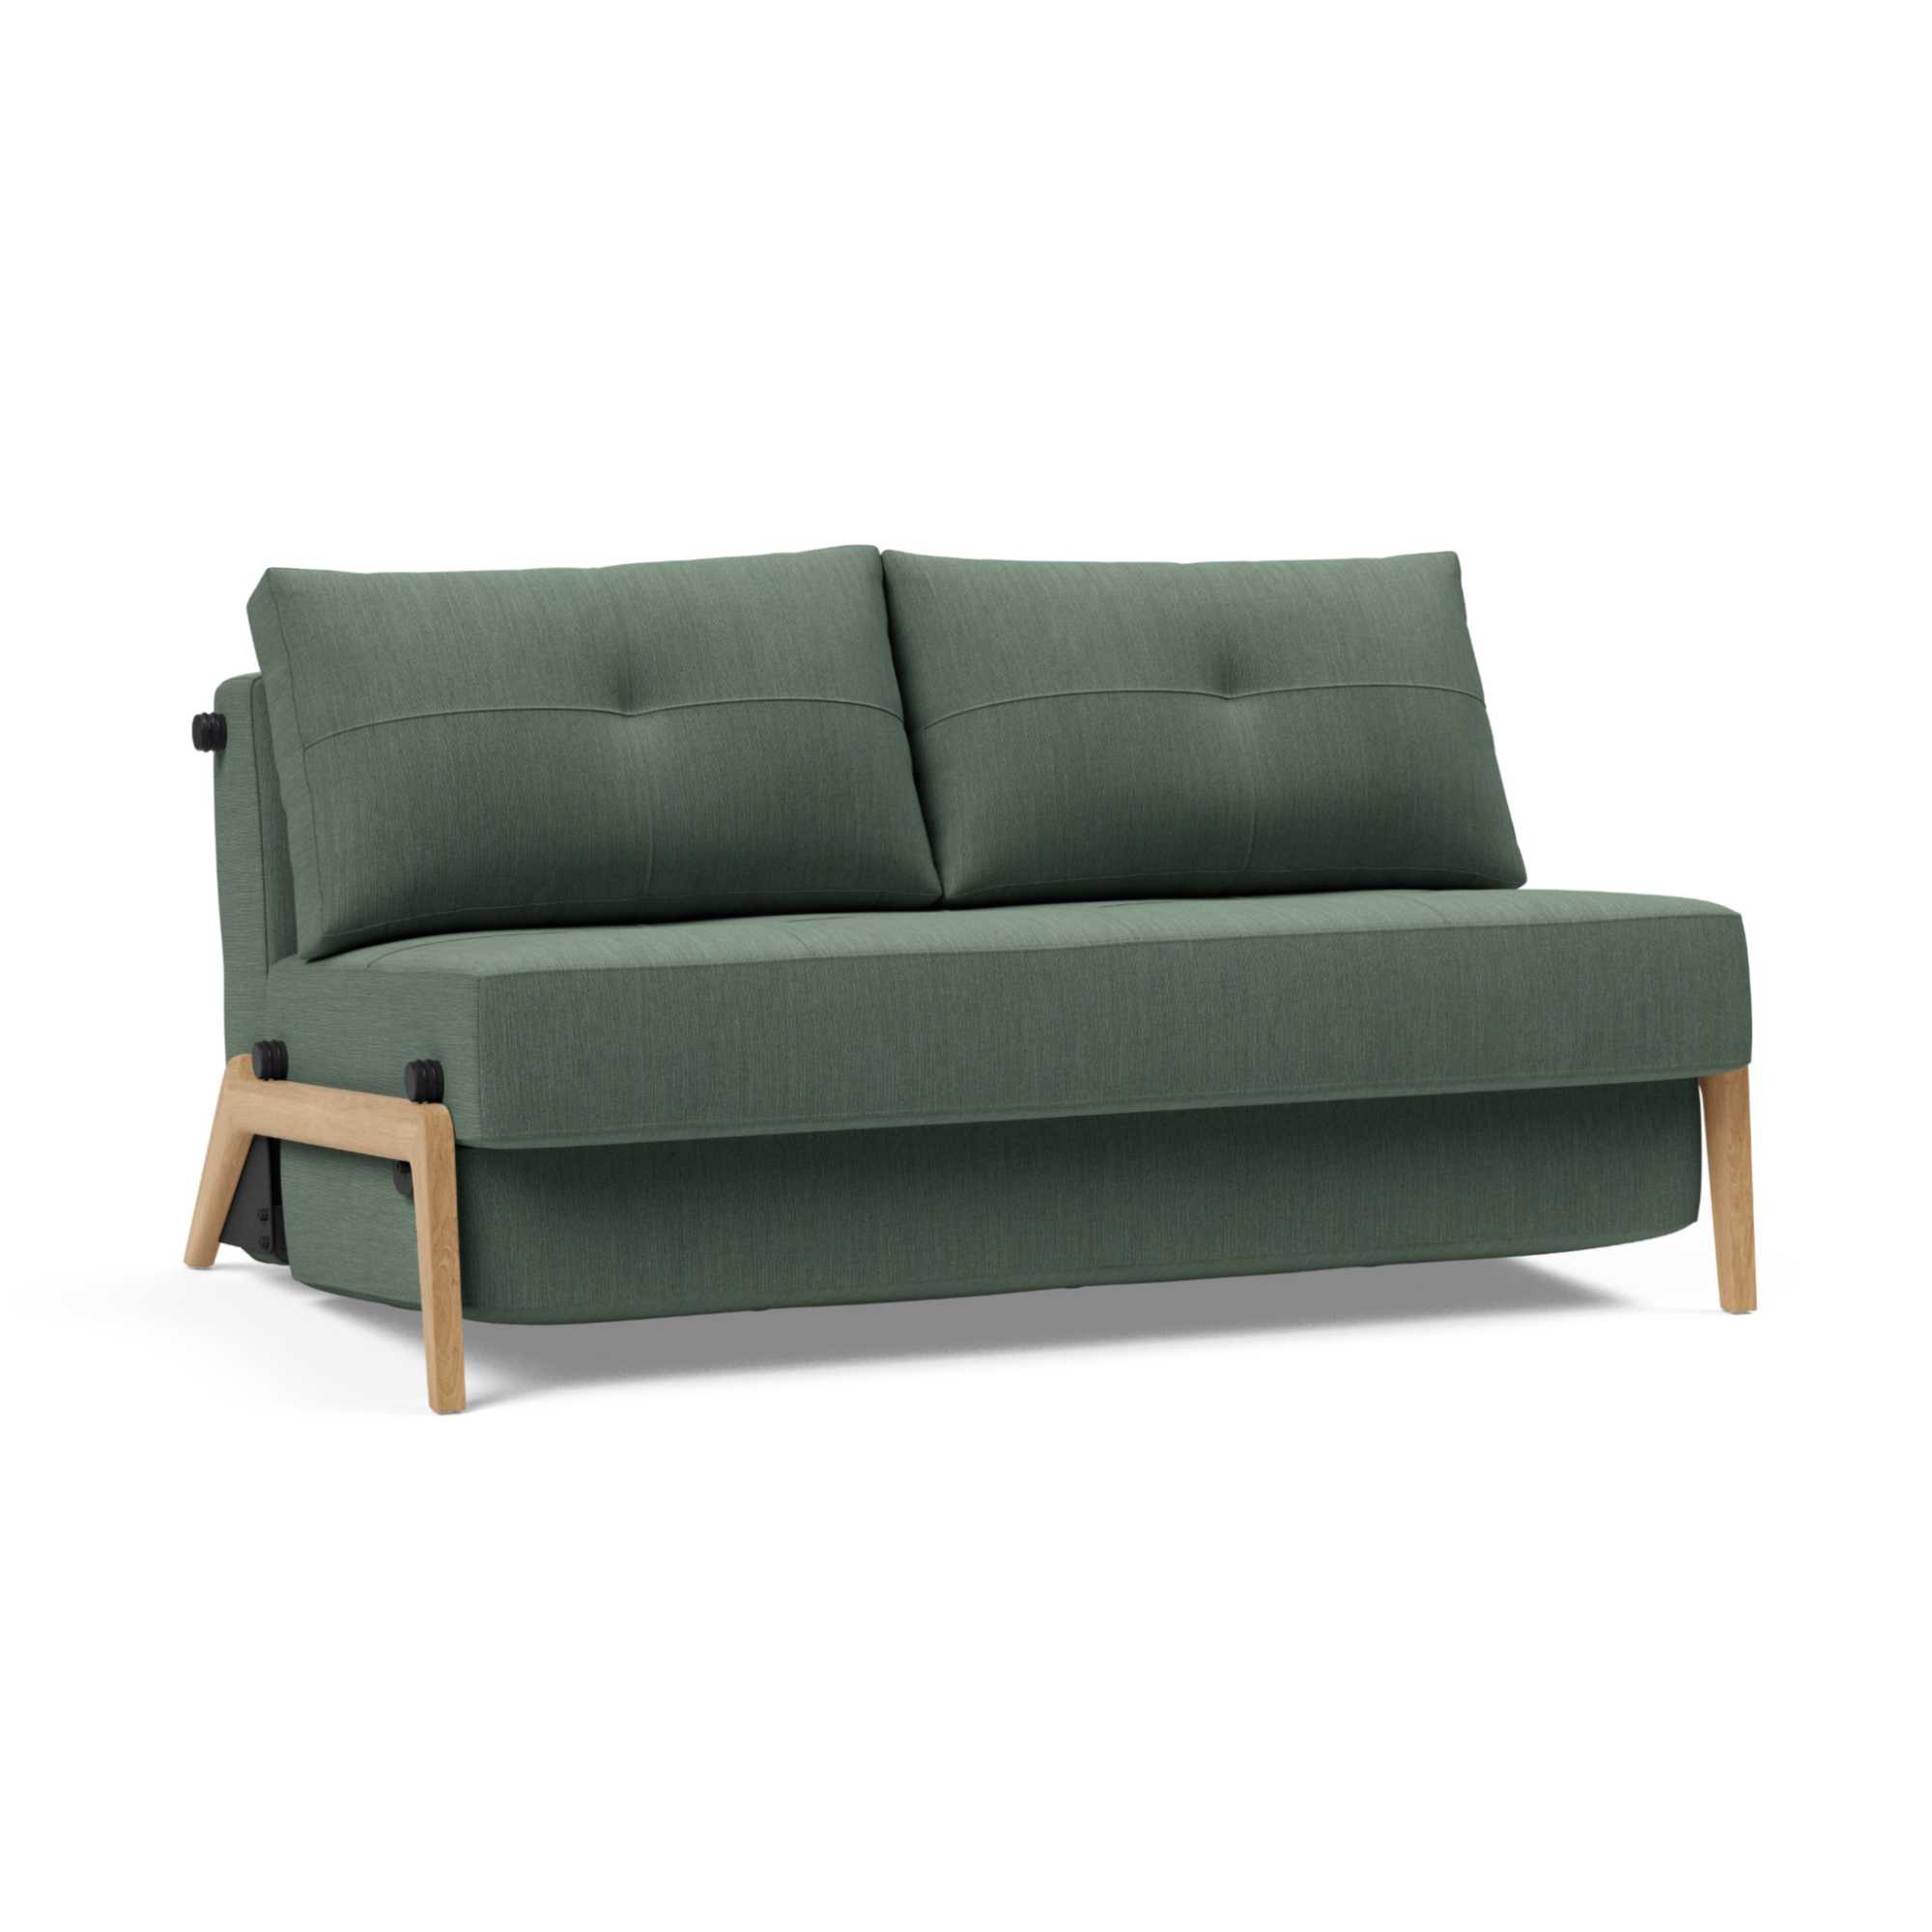 Innovation Living Cubed 140 Wood Sofa Bed, 518EleganceGreen w148xd98xh79cm